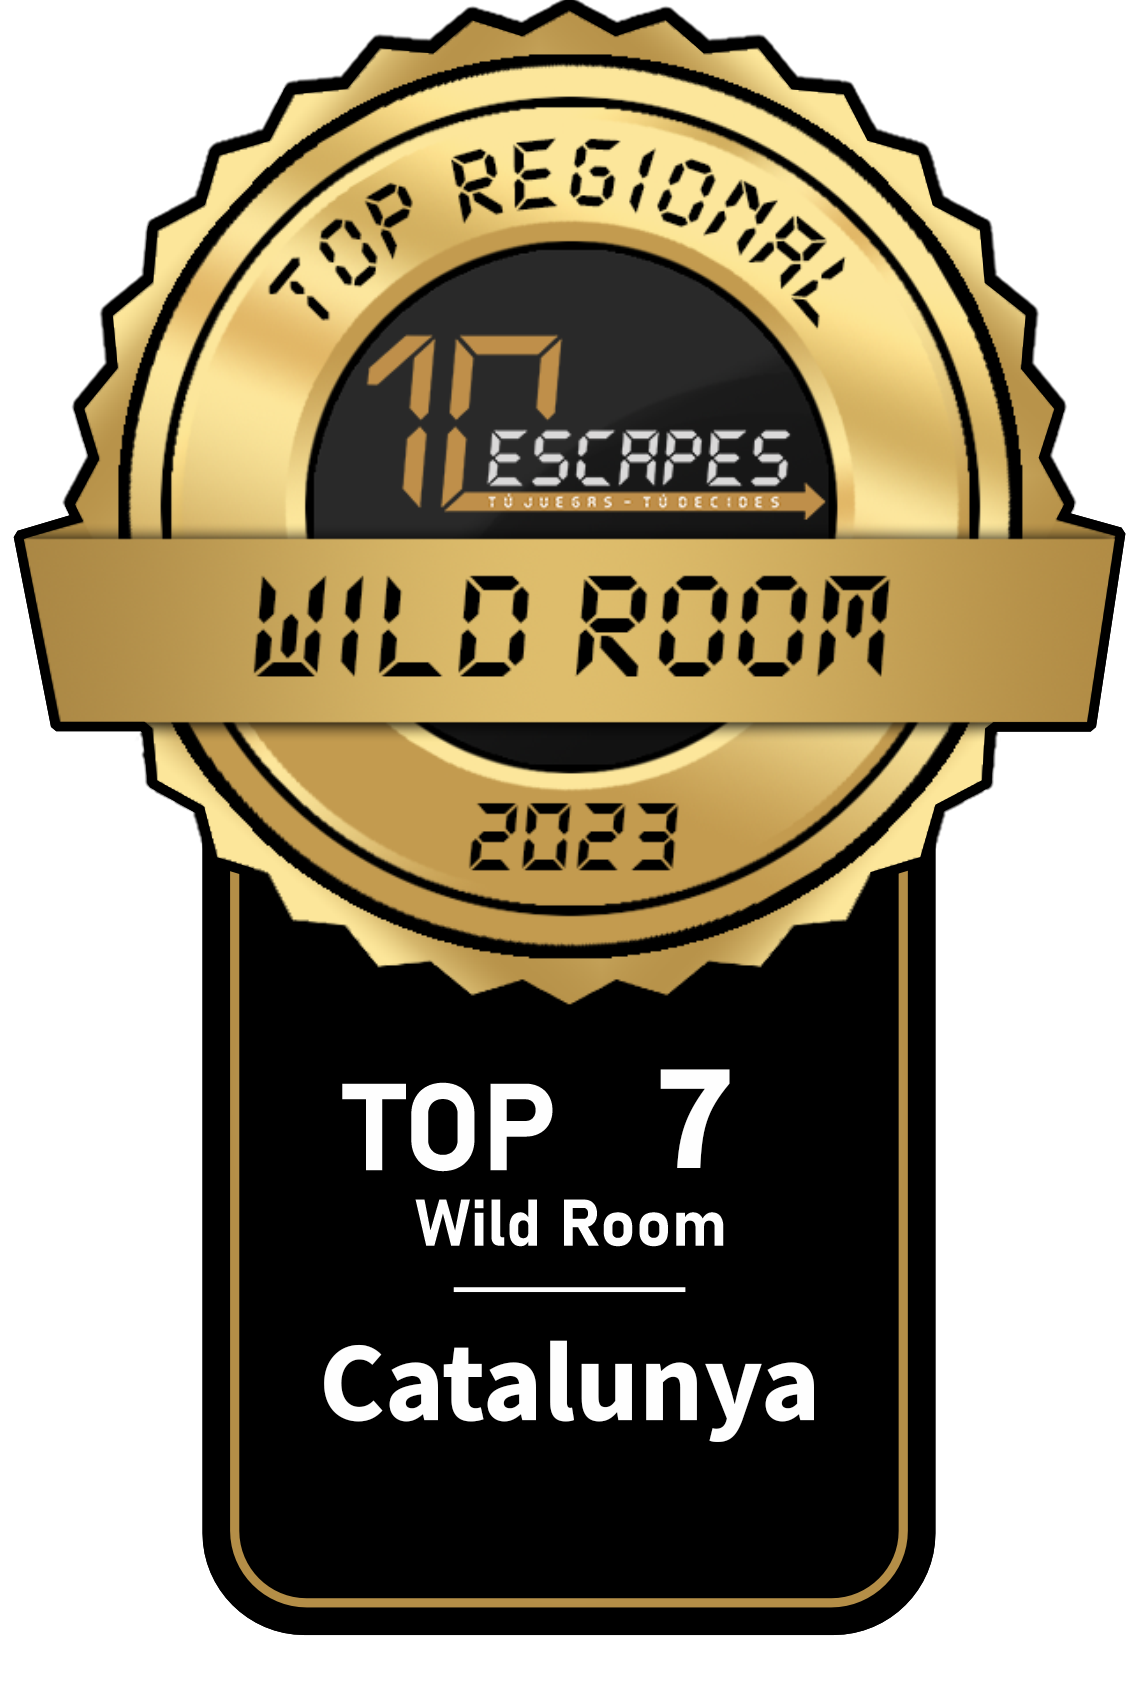 Velatoria Escape Experience. VirusroomEscape. Premio logo 10escapes. Top 7 Regional Catalunya. Wild Room